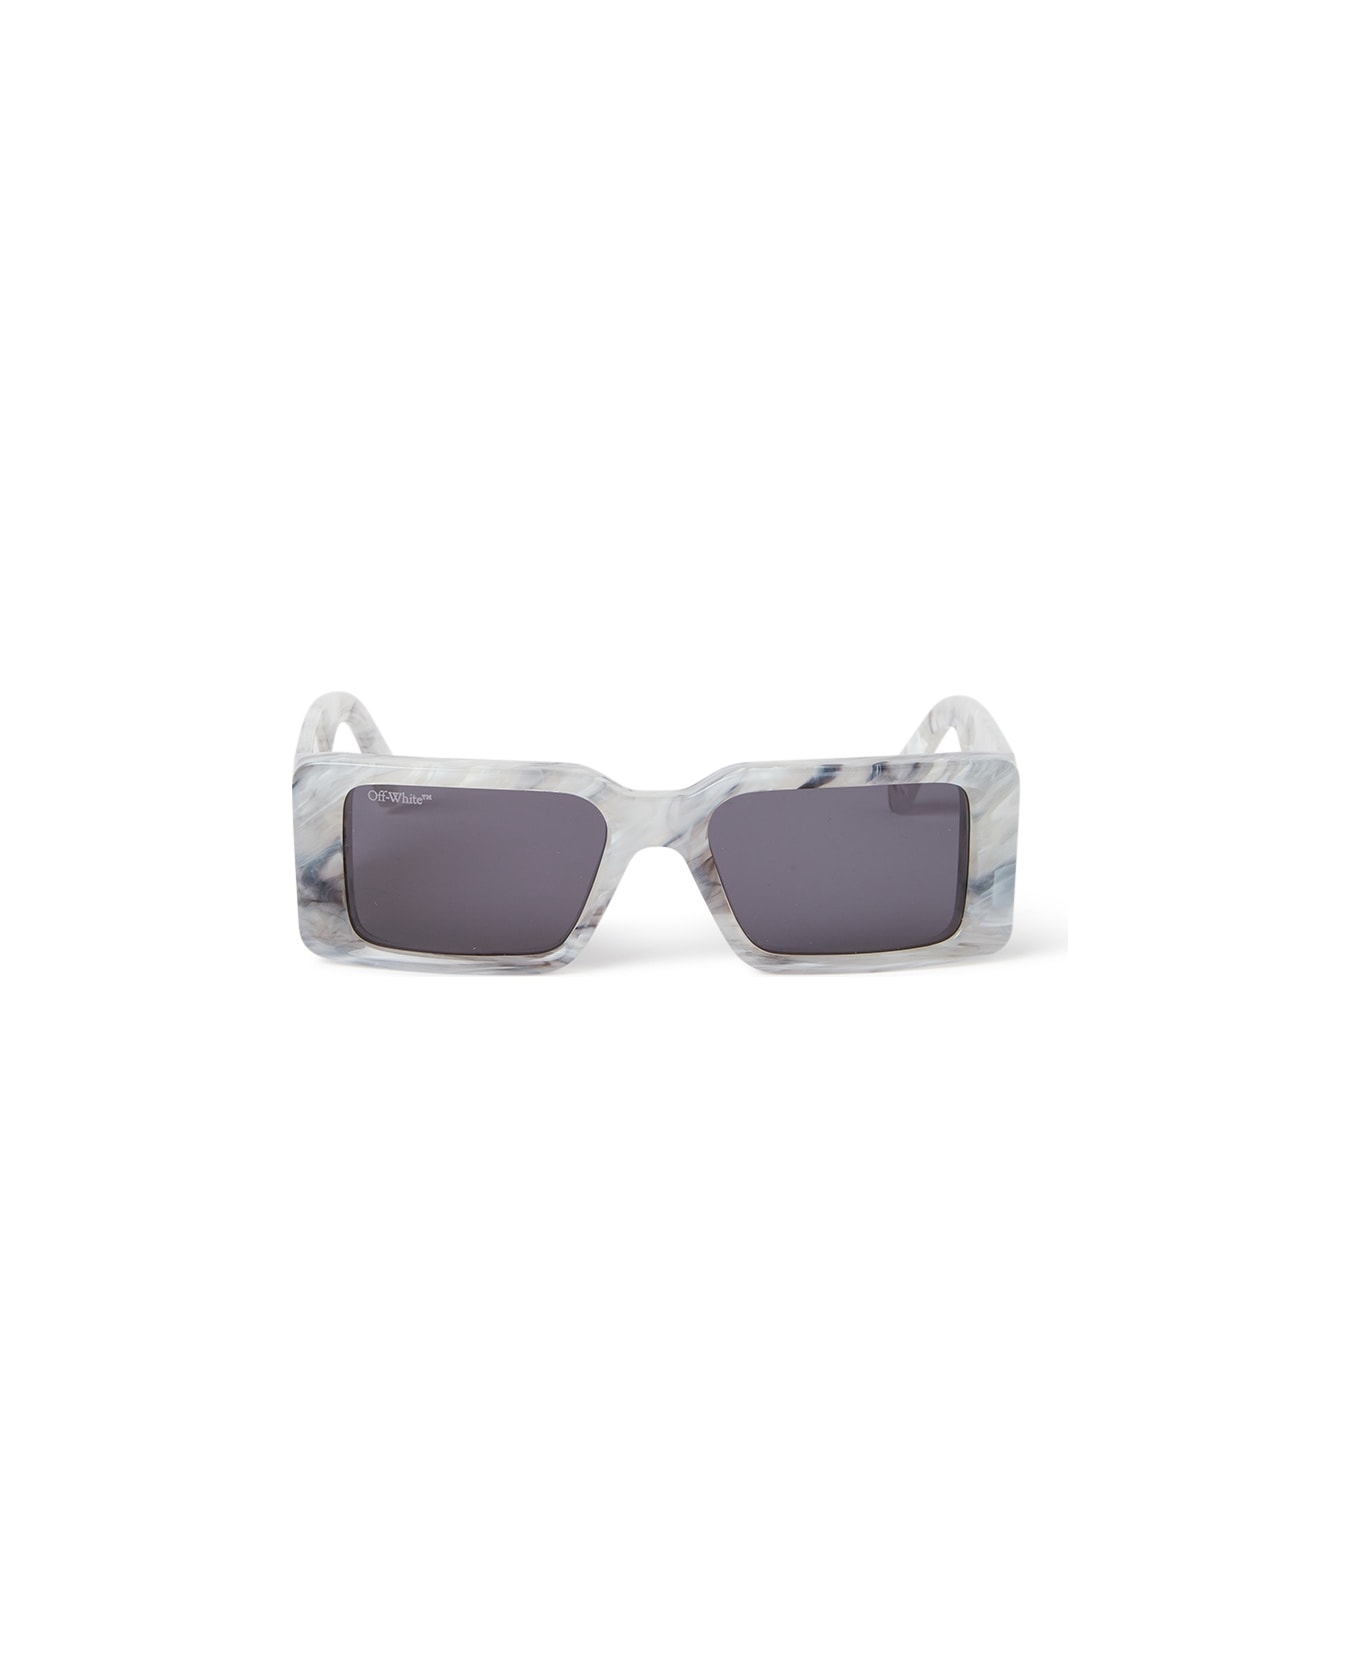 Off-White OERI097 MILANO Sunglasses - Marble サングラス